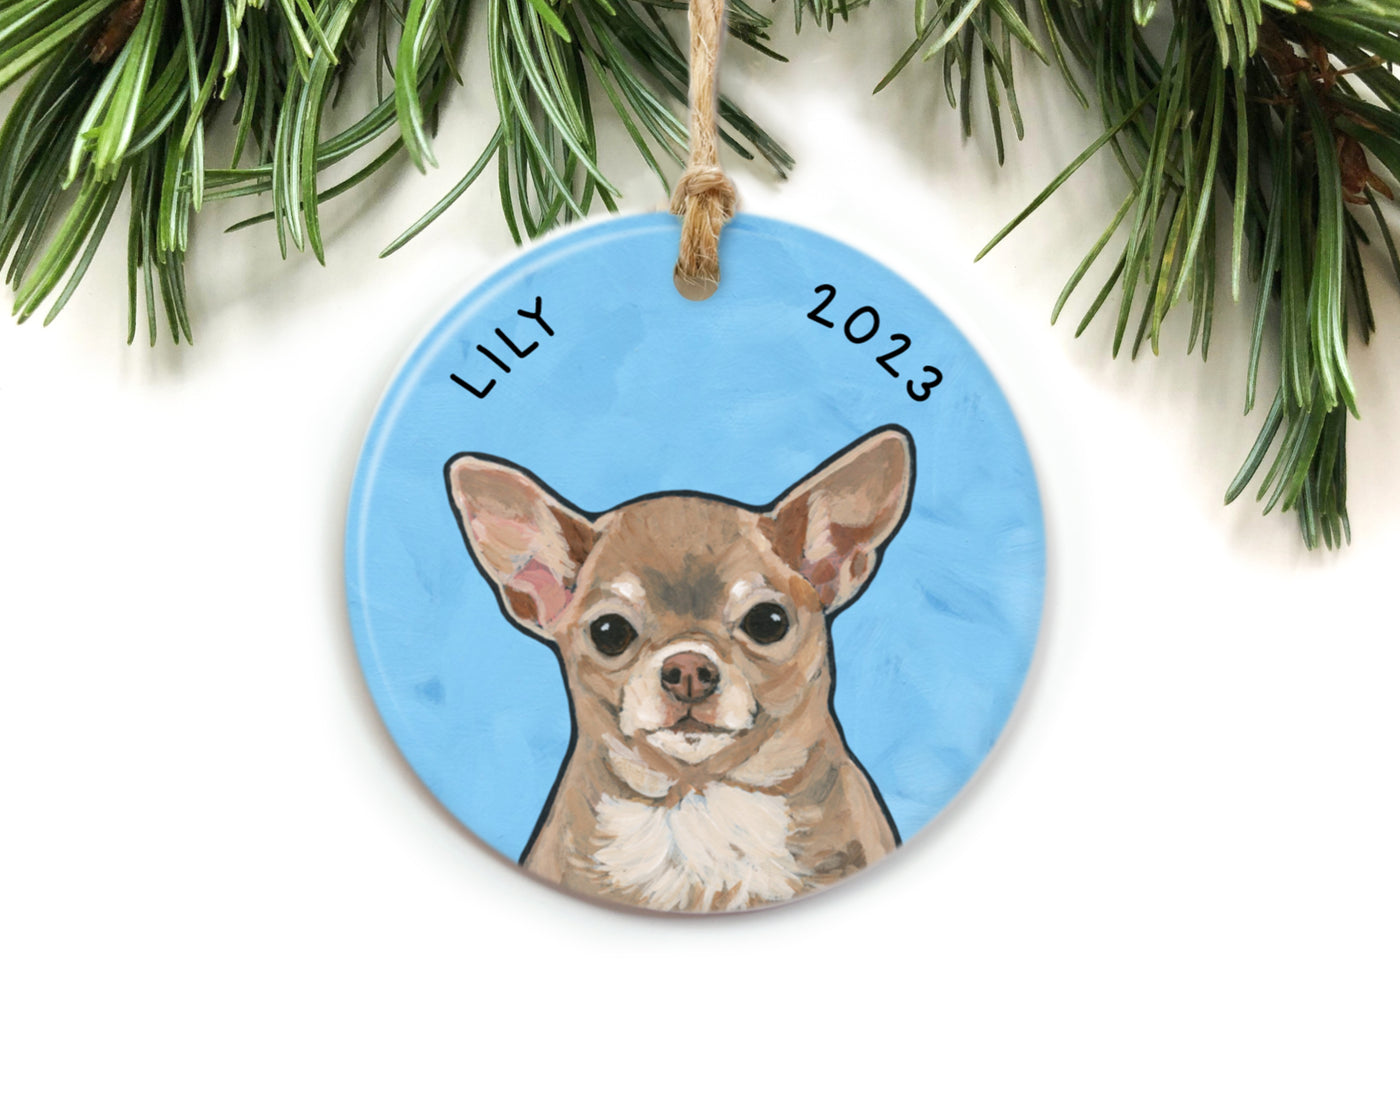 Chihuahua Ornament